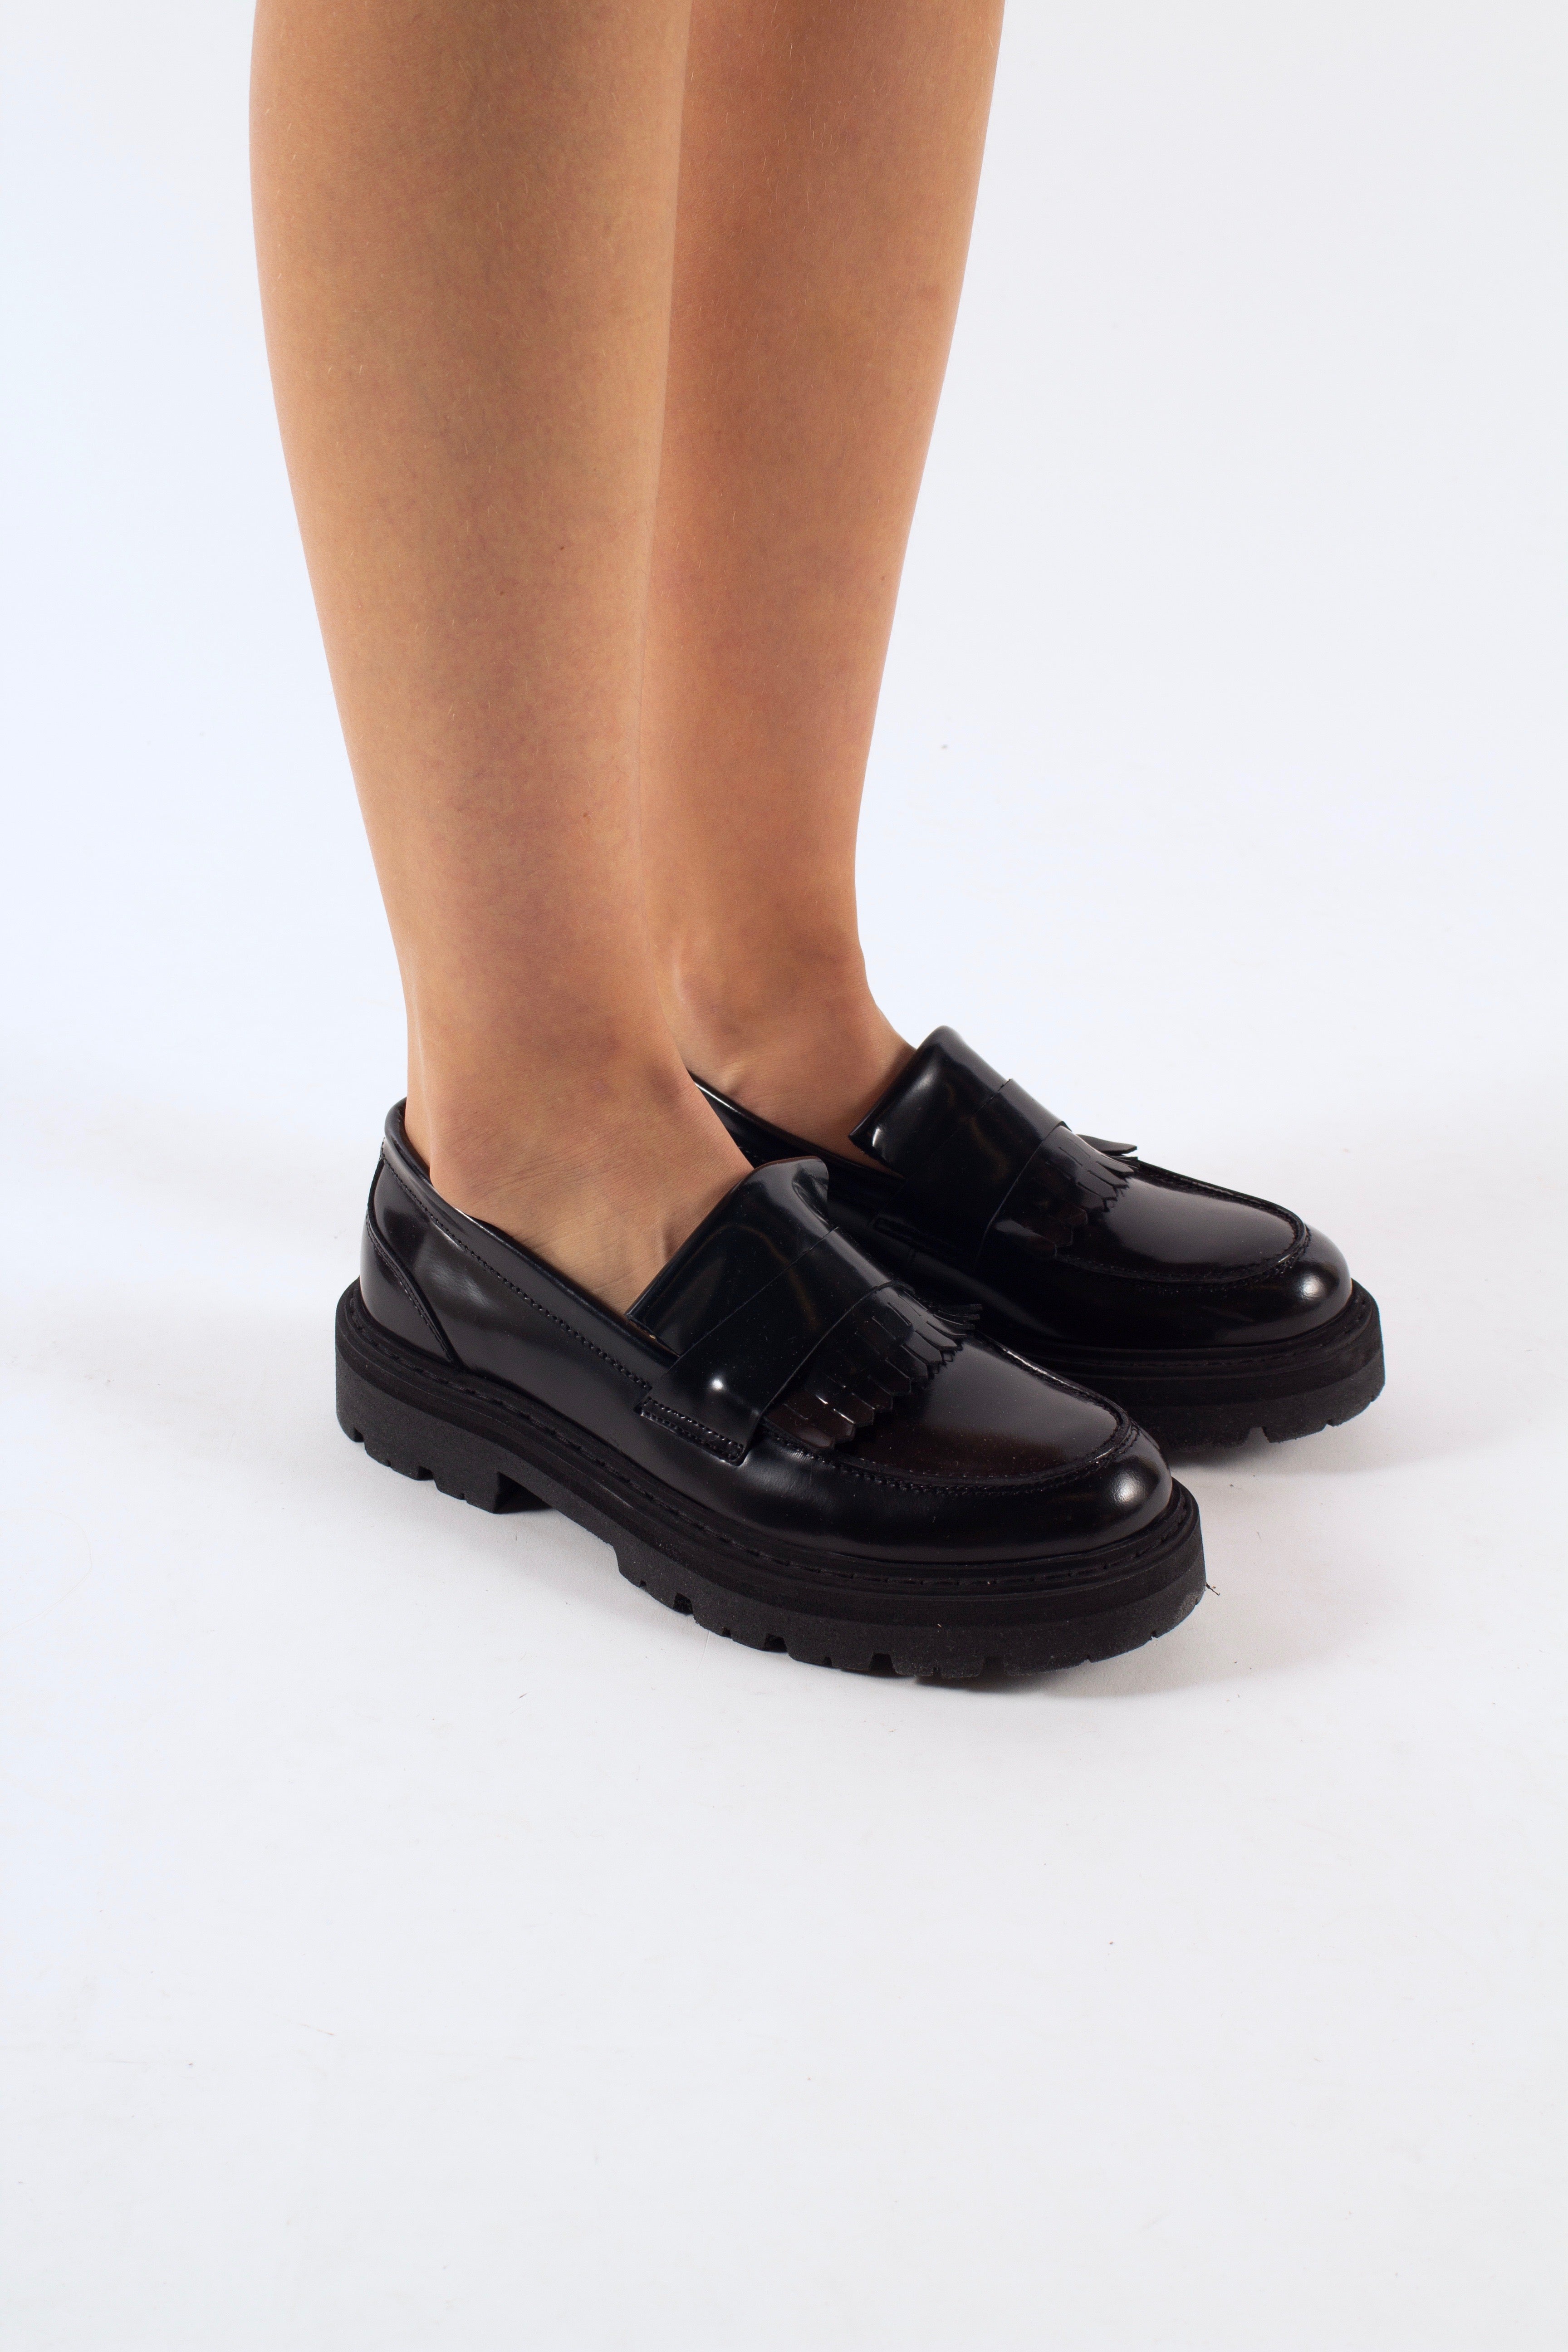 Loafer - Black - Garment Project - Sort 36 GARMENT PROJECT WMNS Sort 1198.00 DKK